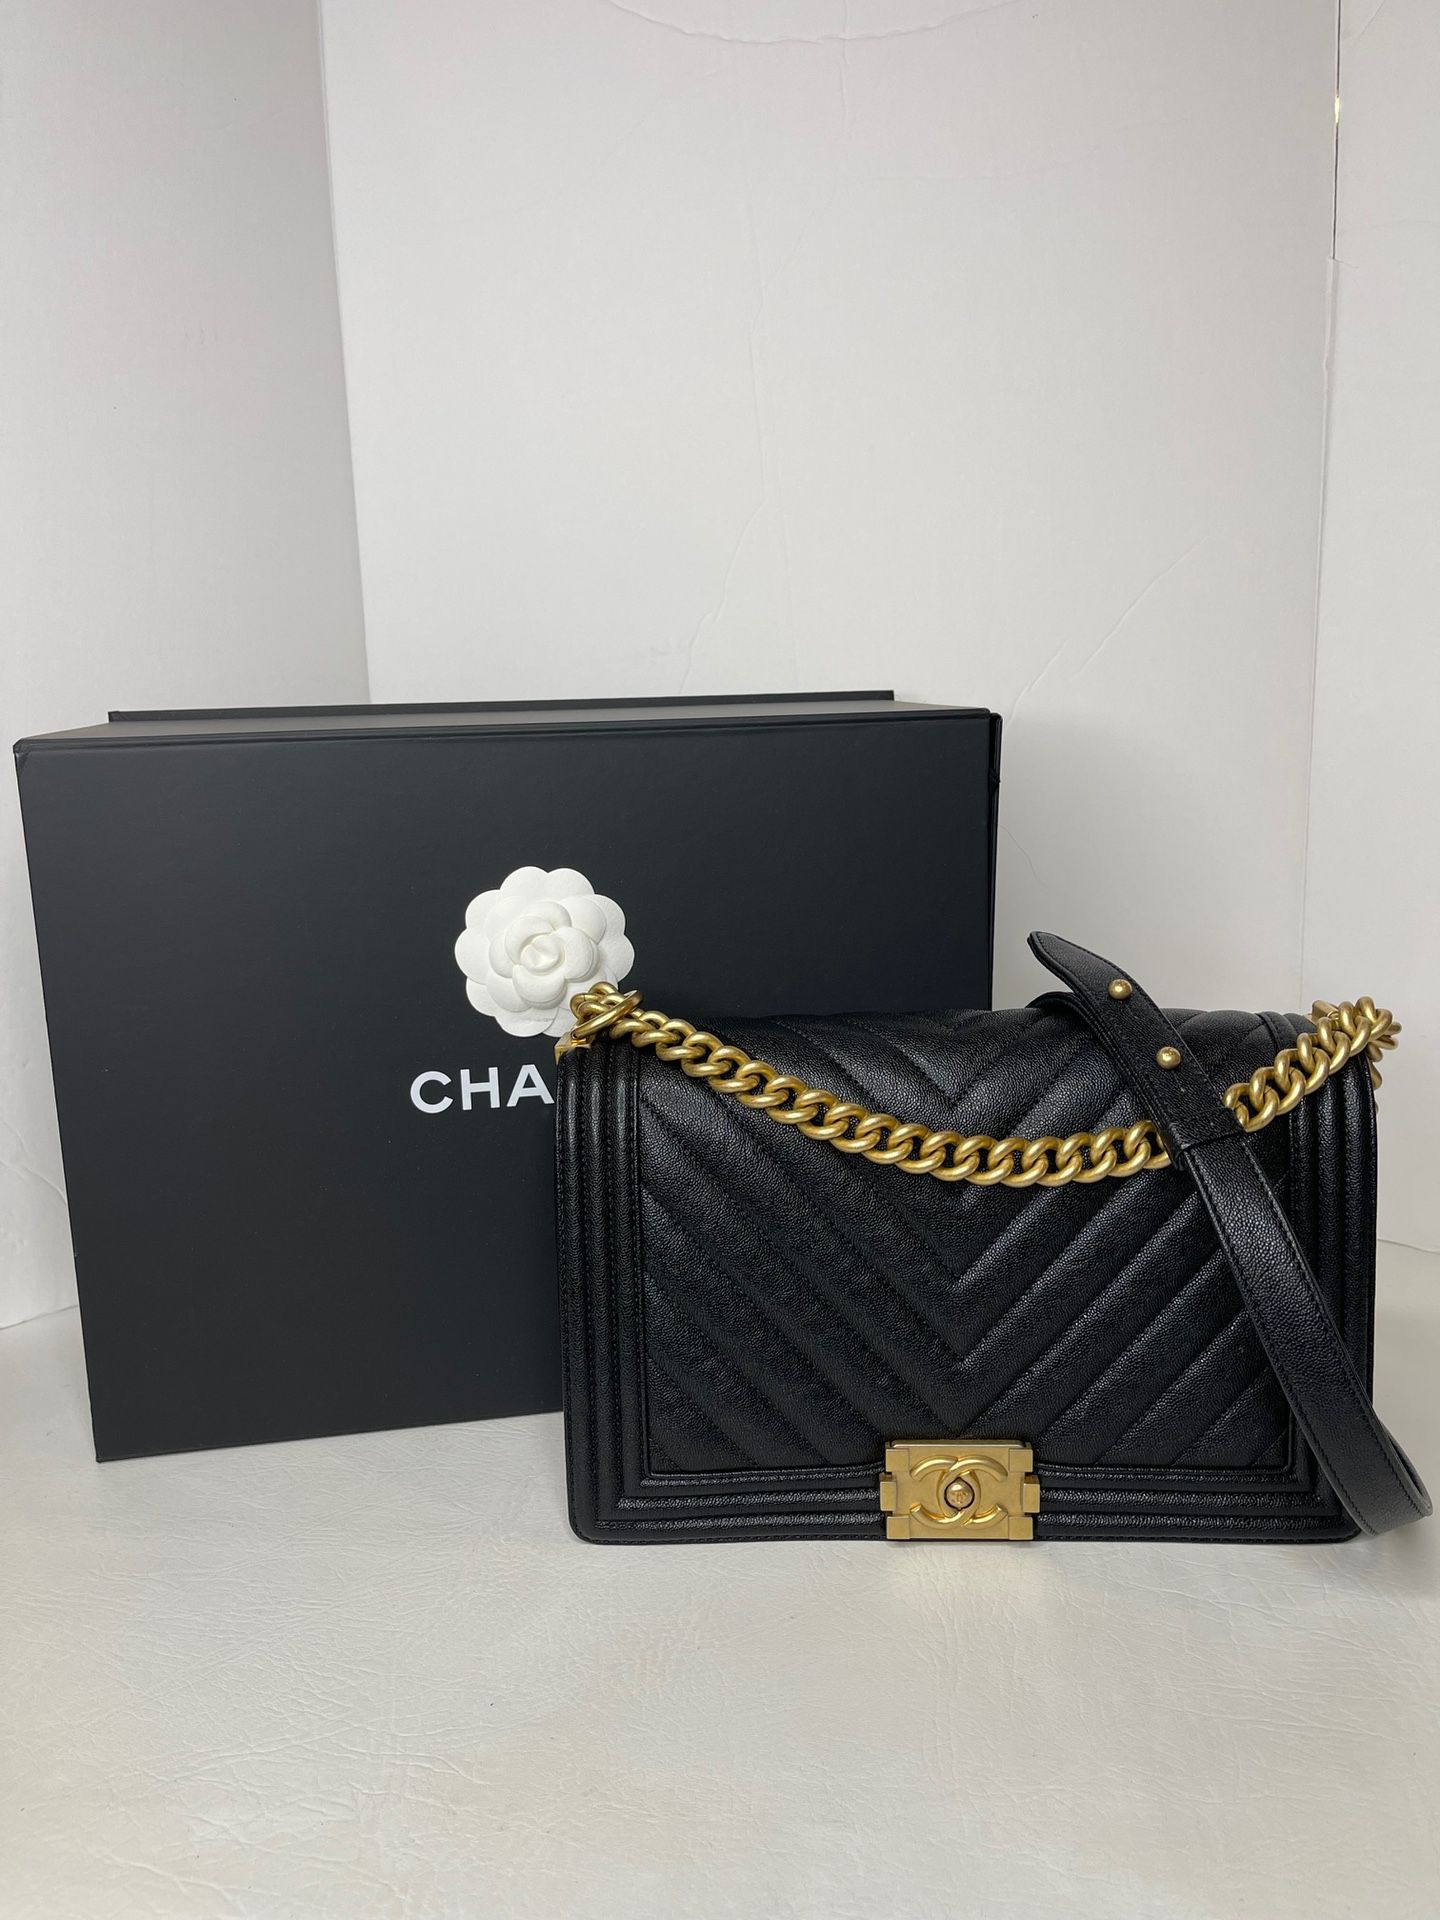 Authentic Chanel Large Boy Bag Black Chevron Caviar/ Ghw Leather Crossbody Shoulder Bag❌SOLD❌